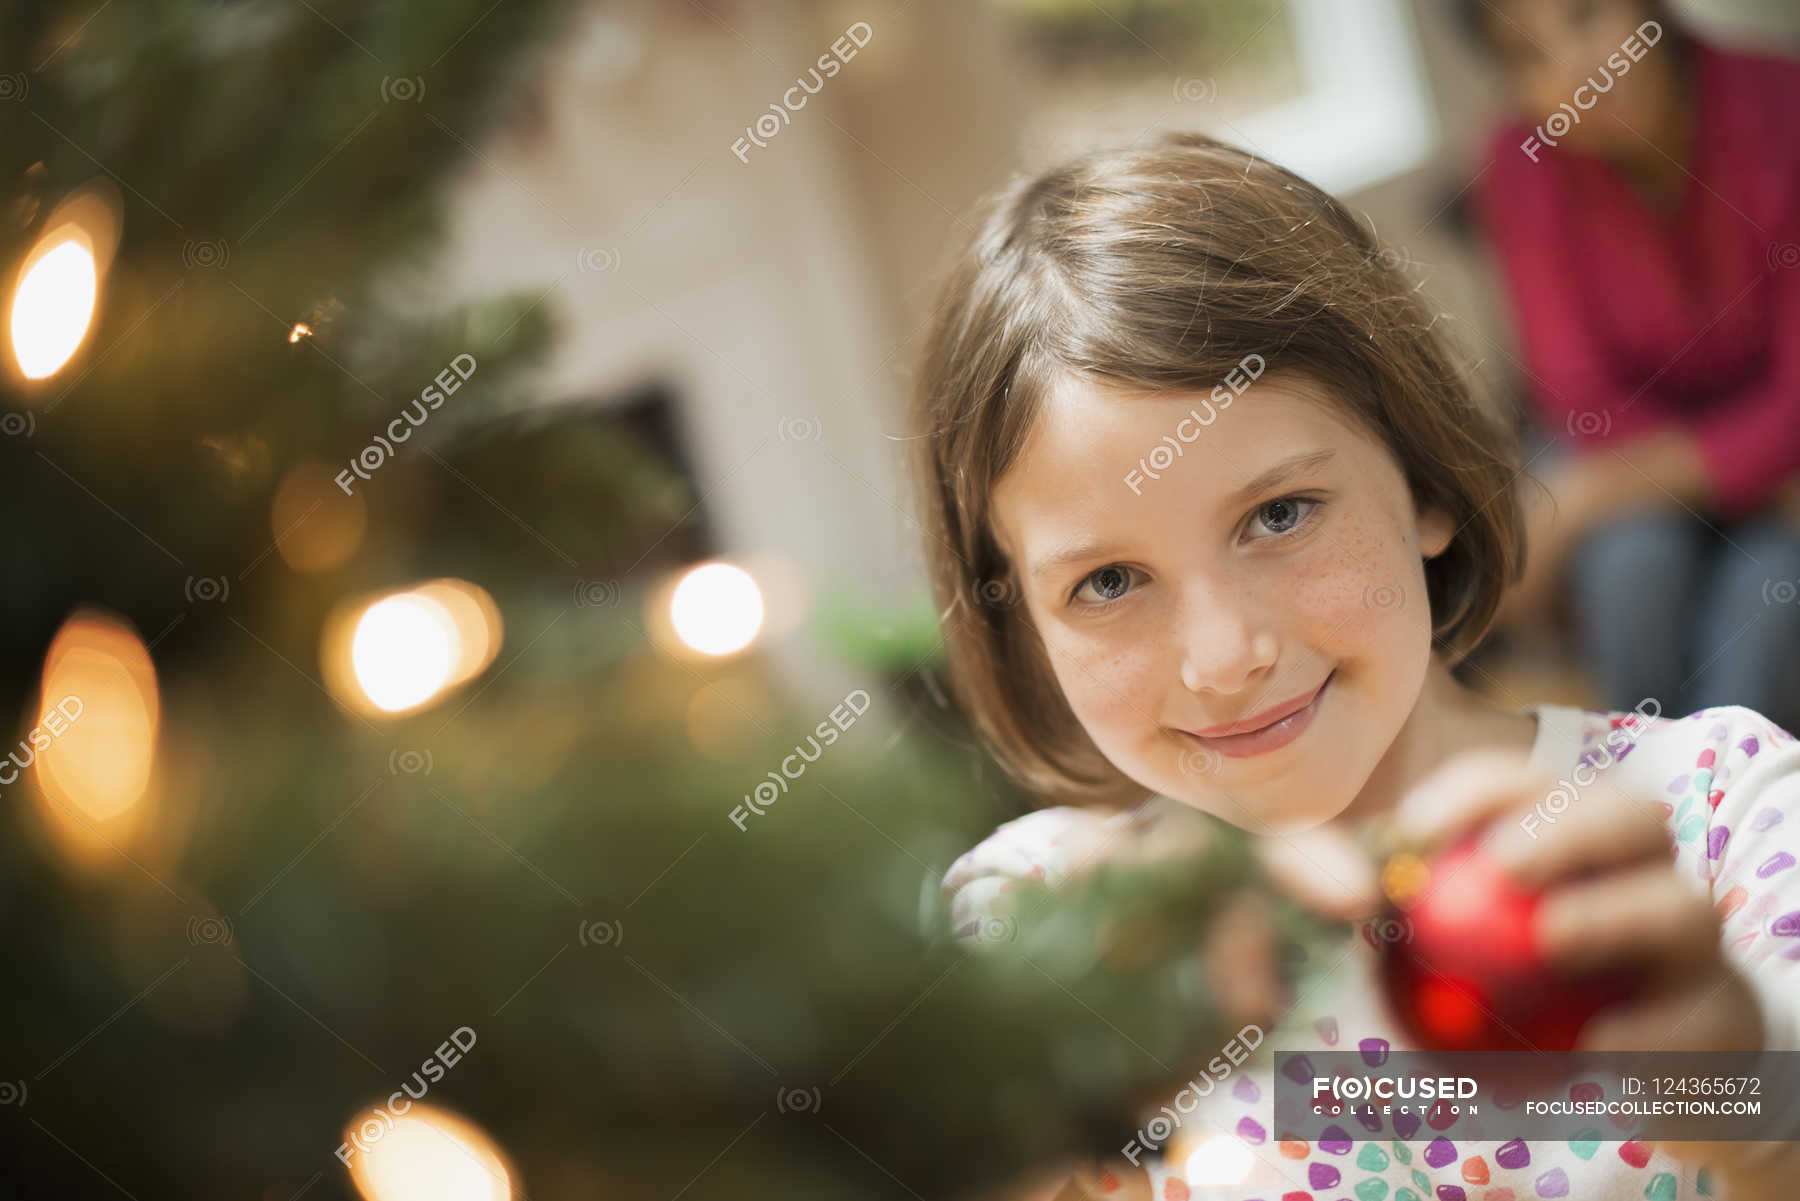 Girl placing bauble on Christmas tree — Stock Photo | #124365672